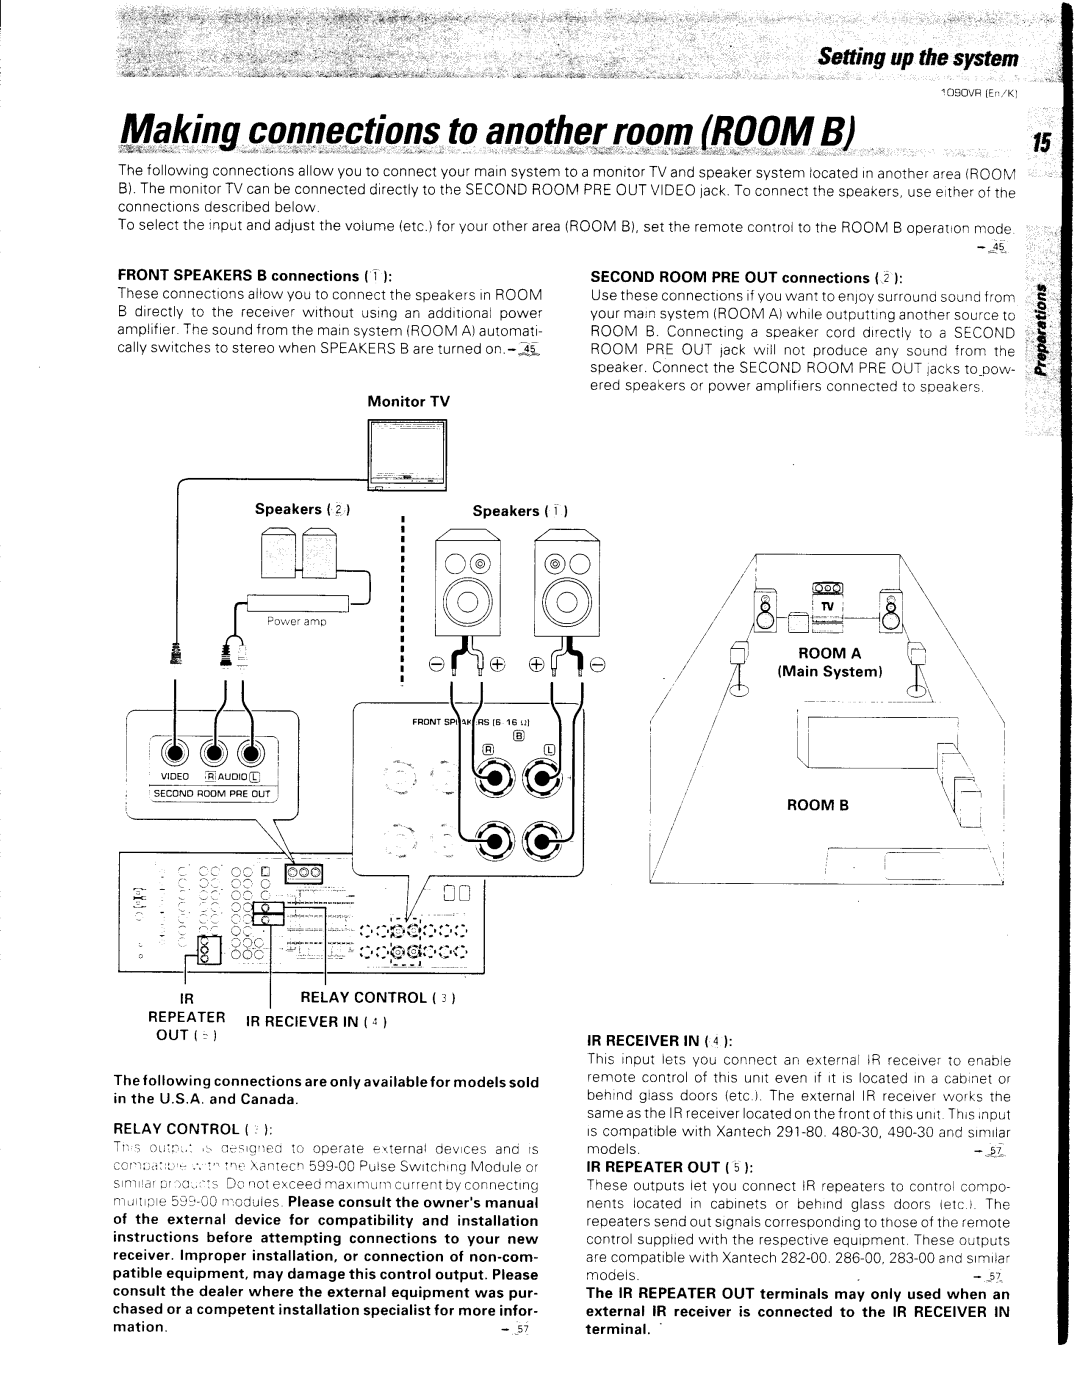 Kenwood 1090VR manual 